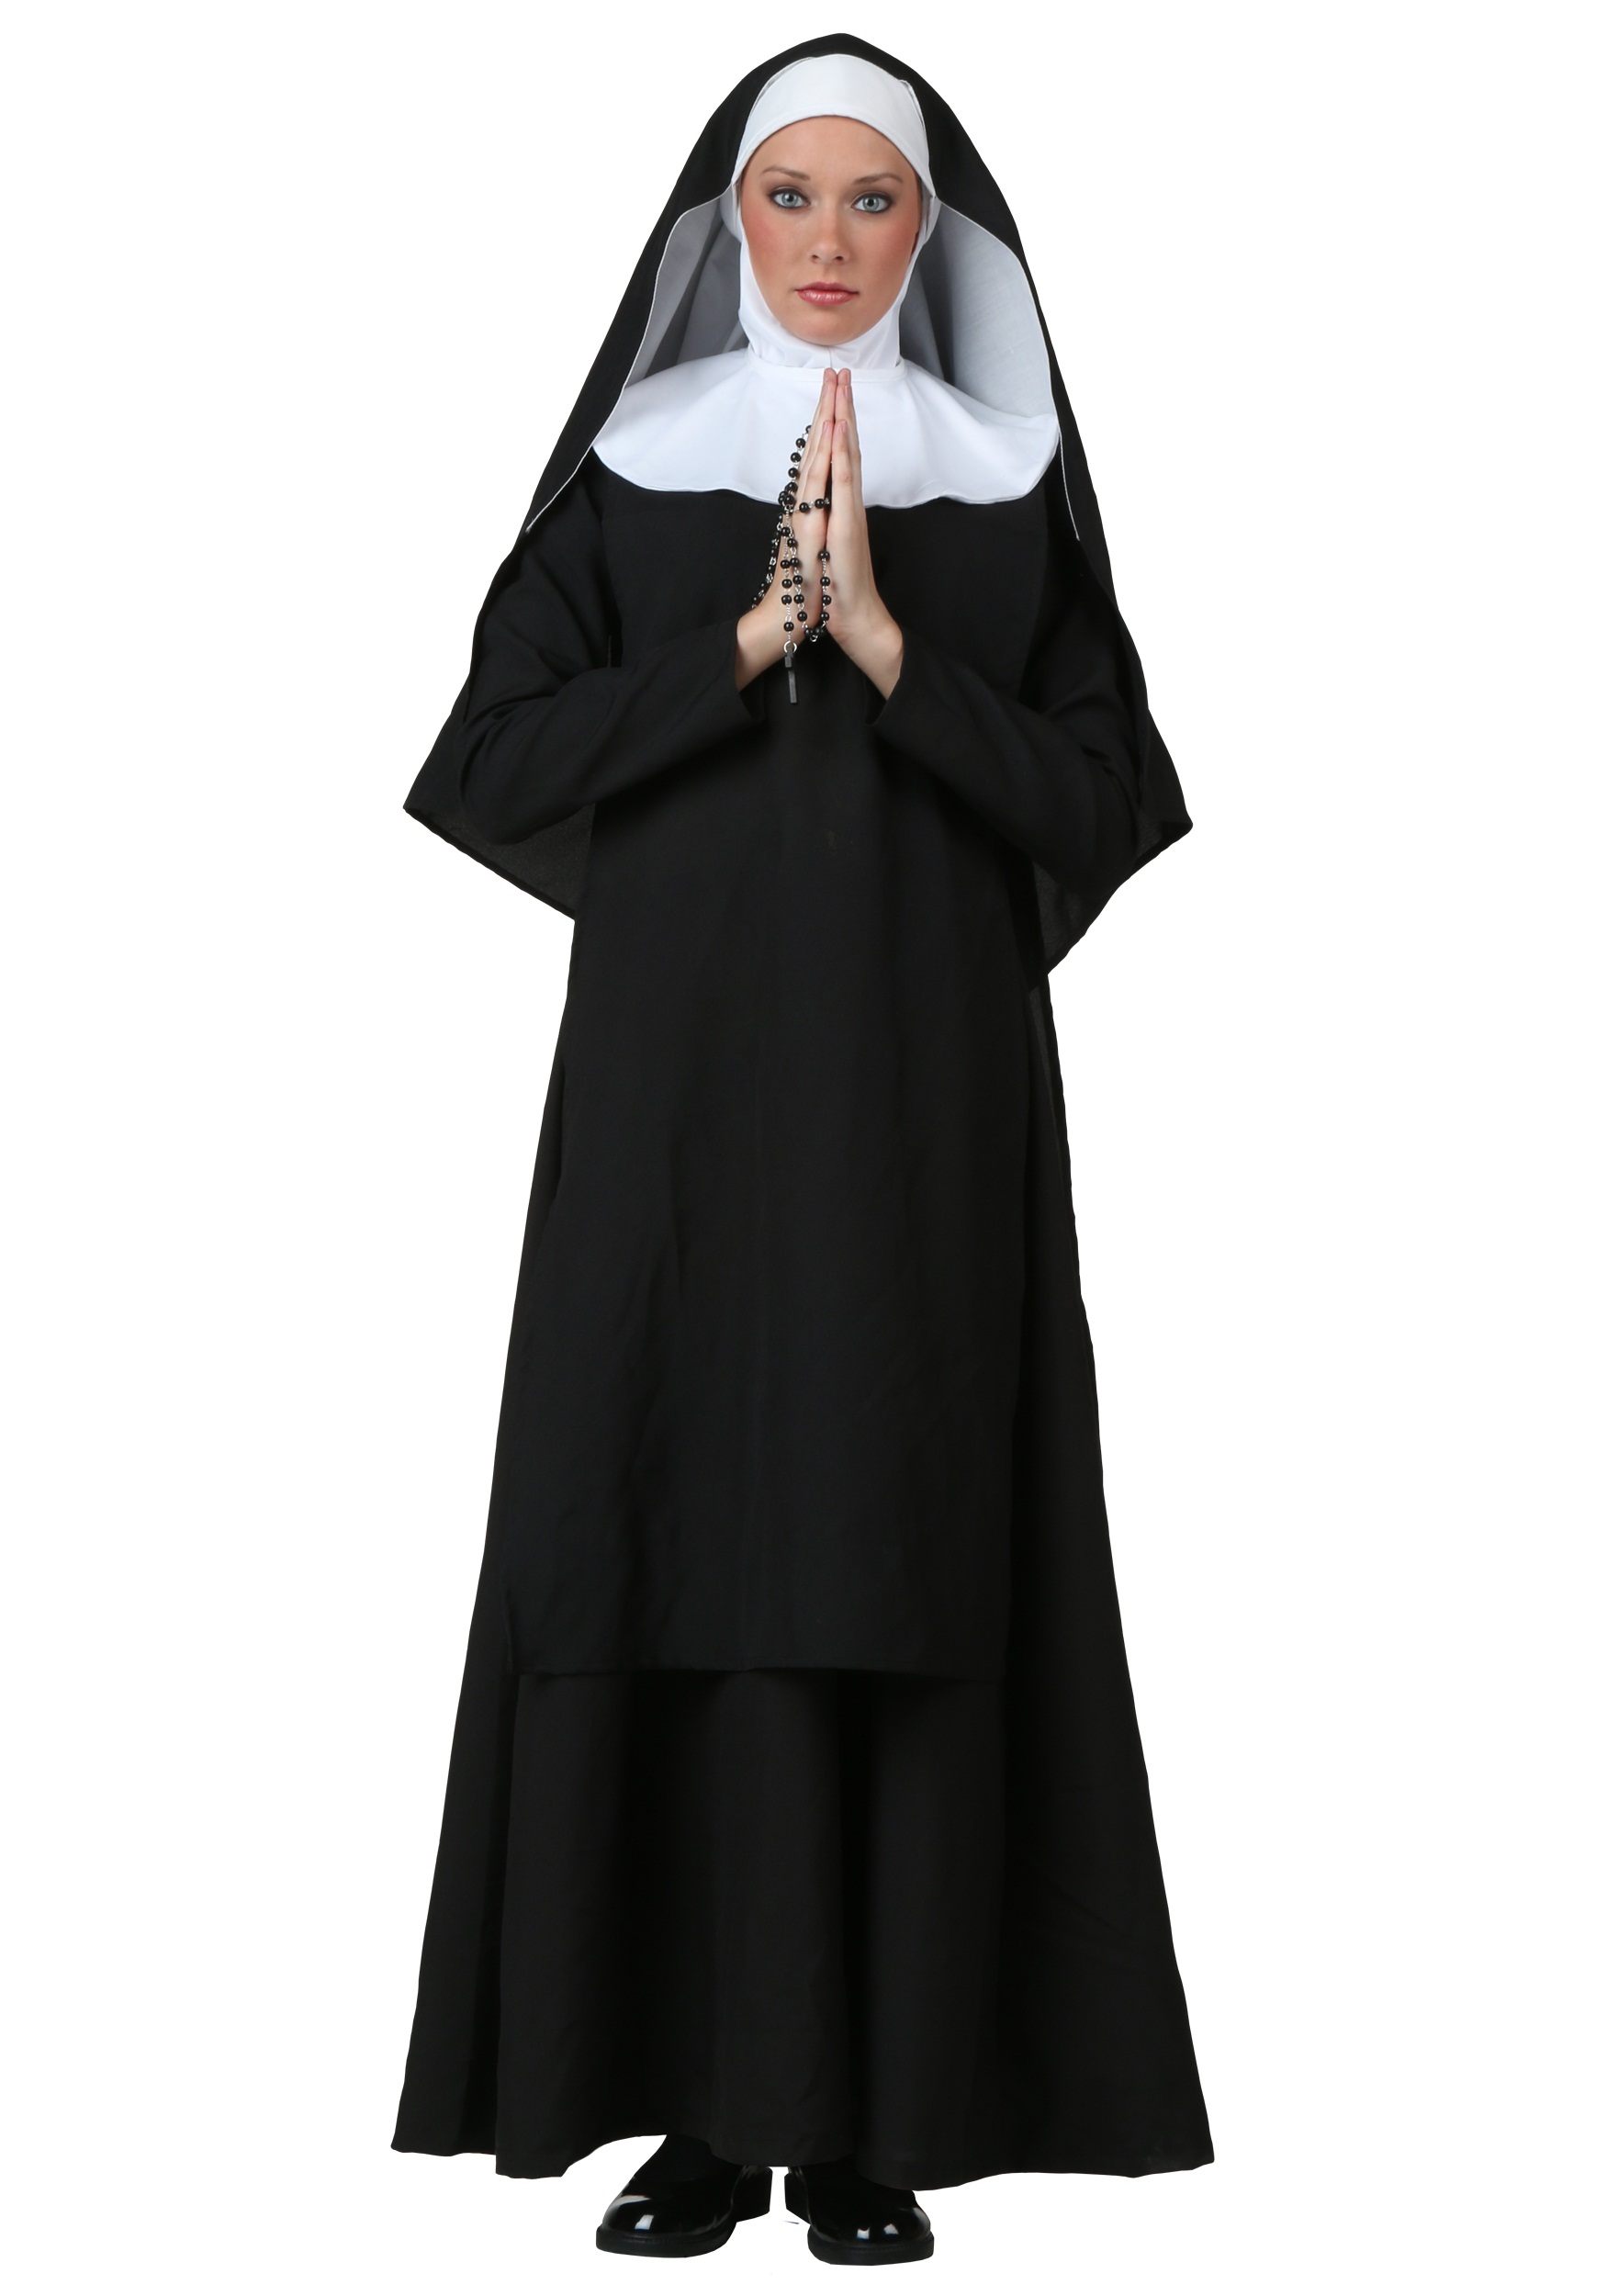 Deluxe Nun Costume - image 1 of 3